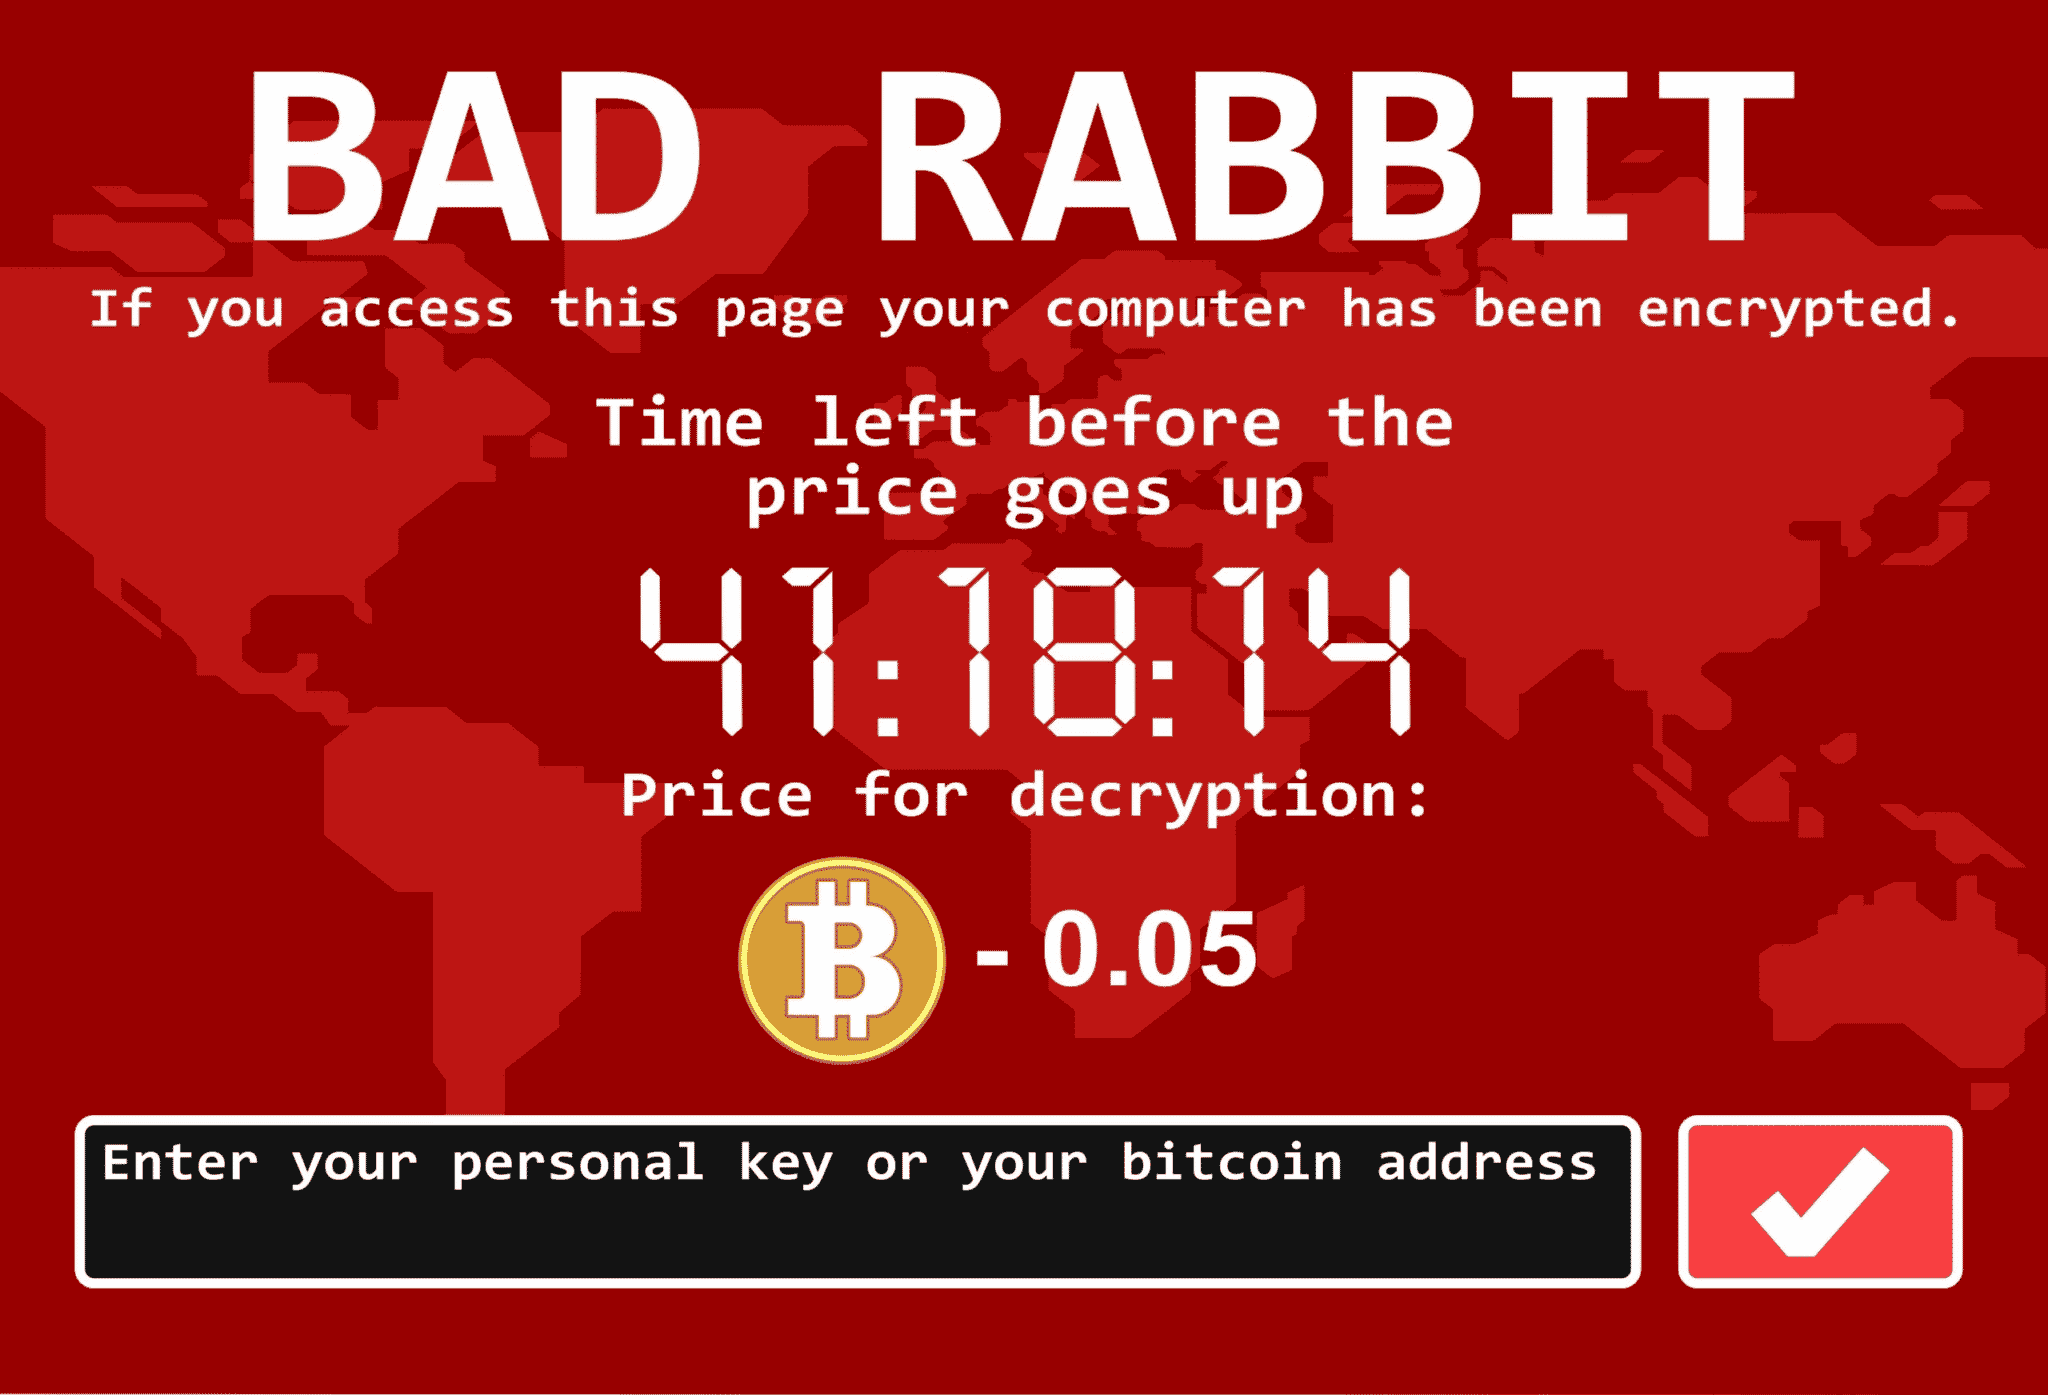 bad rabbit ransomware